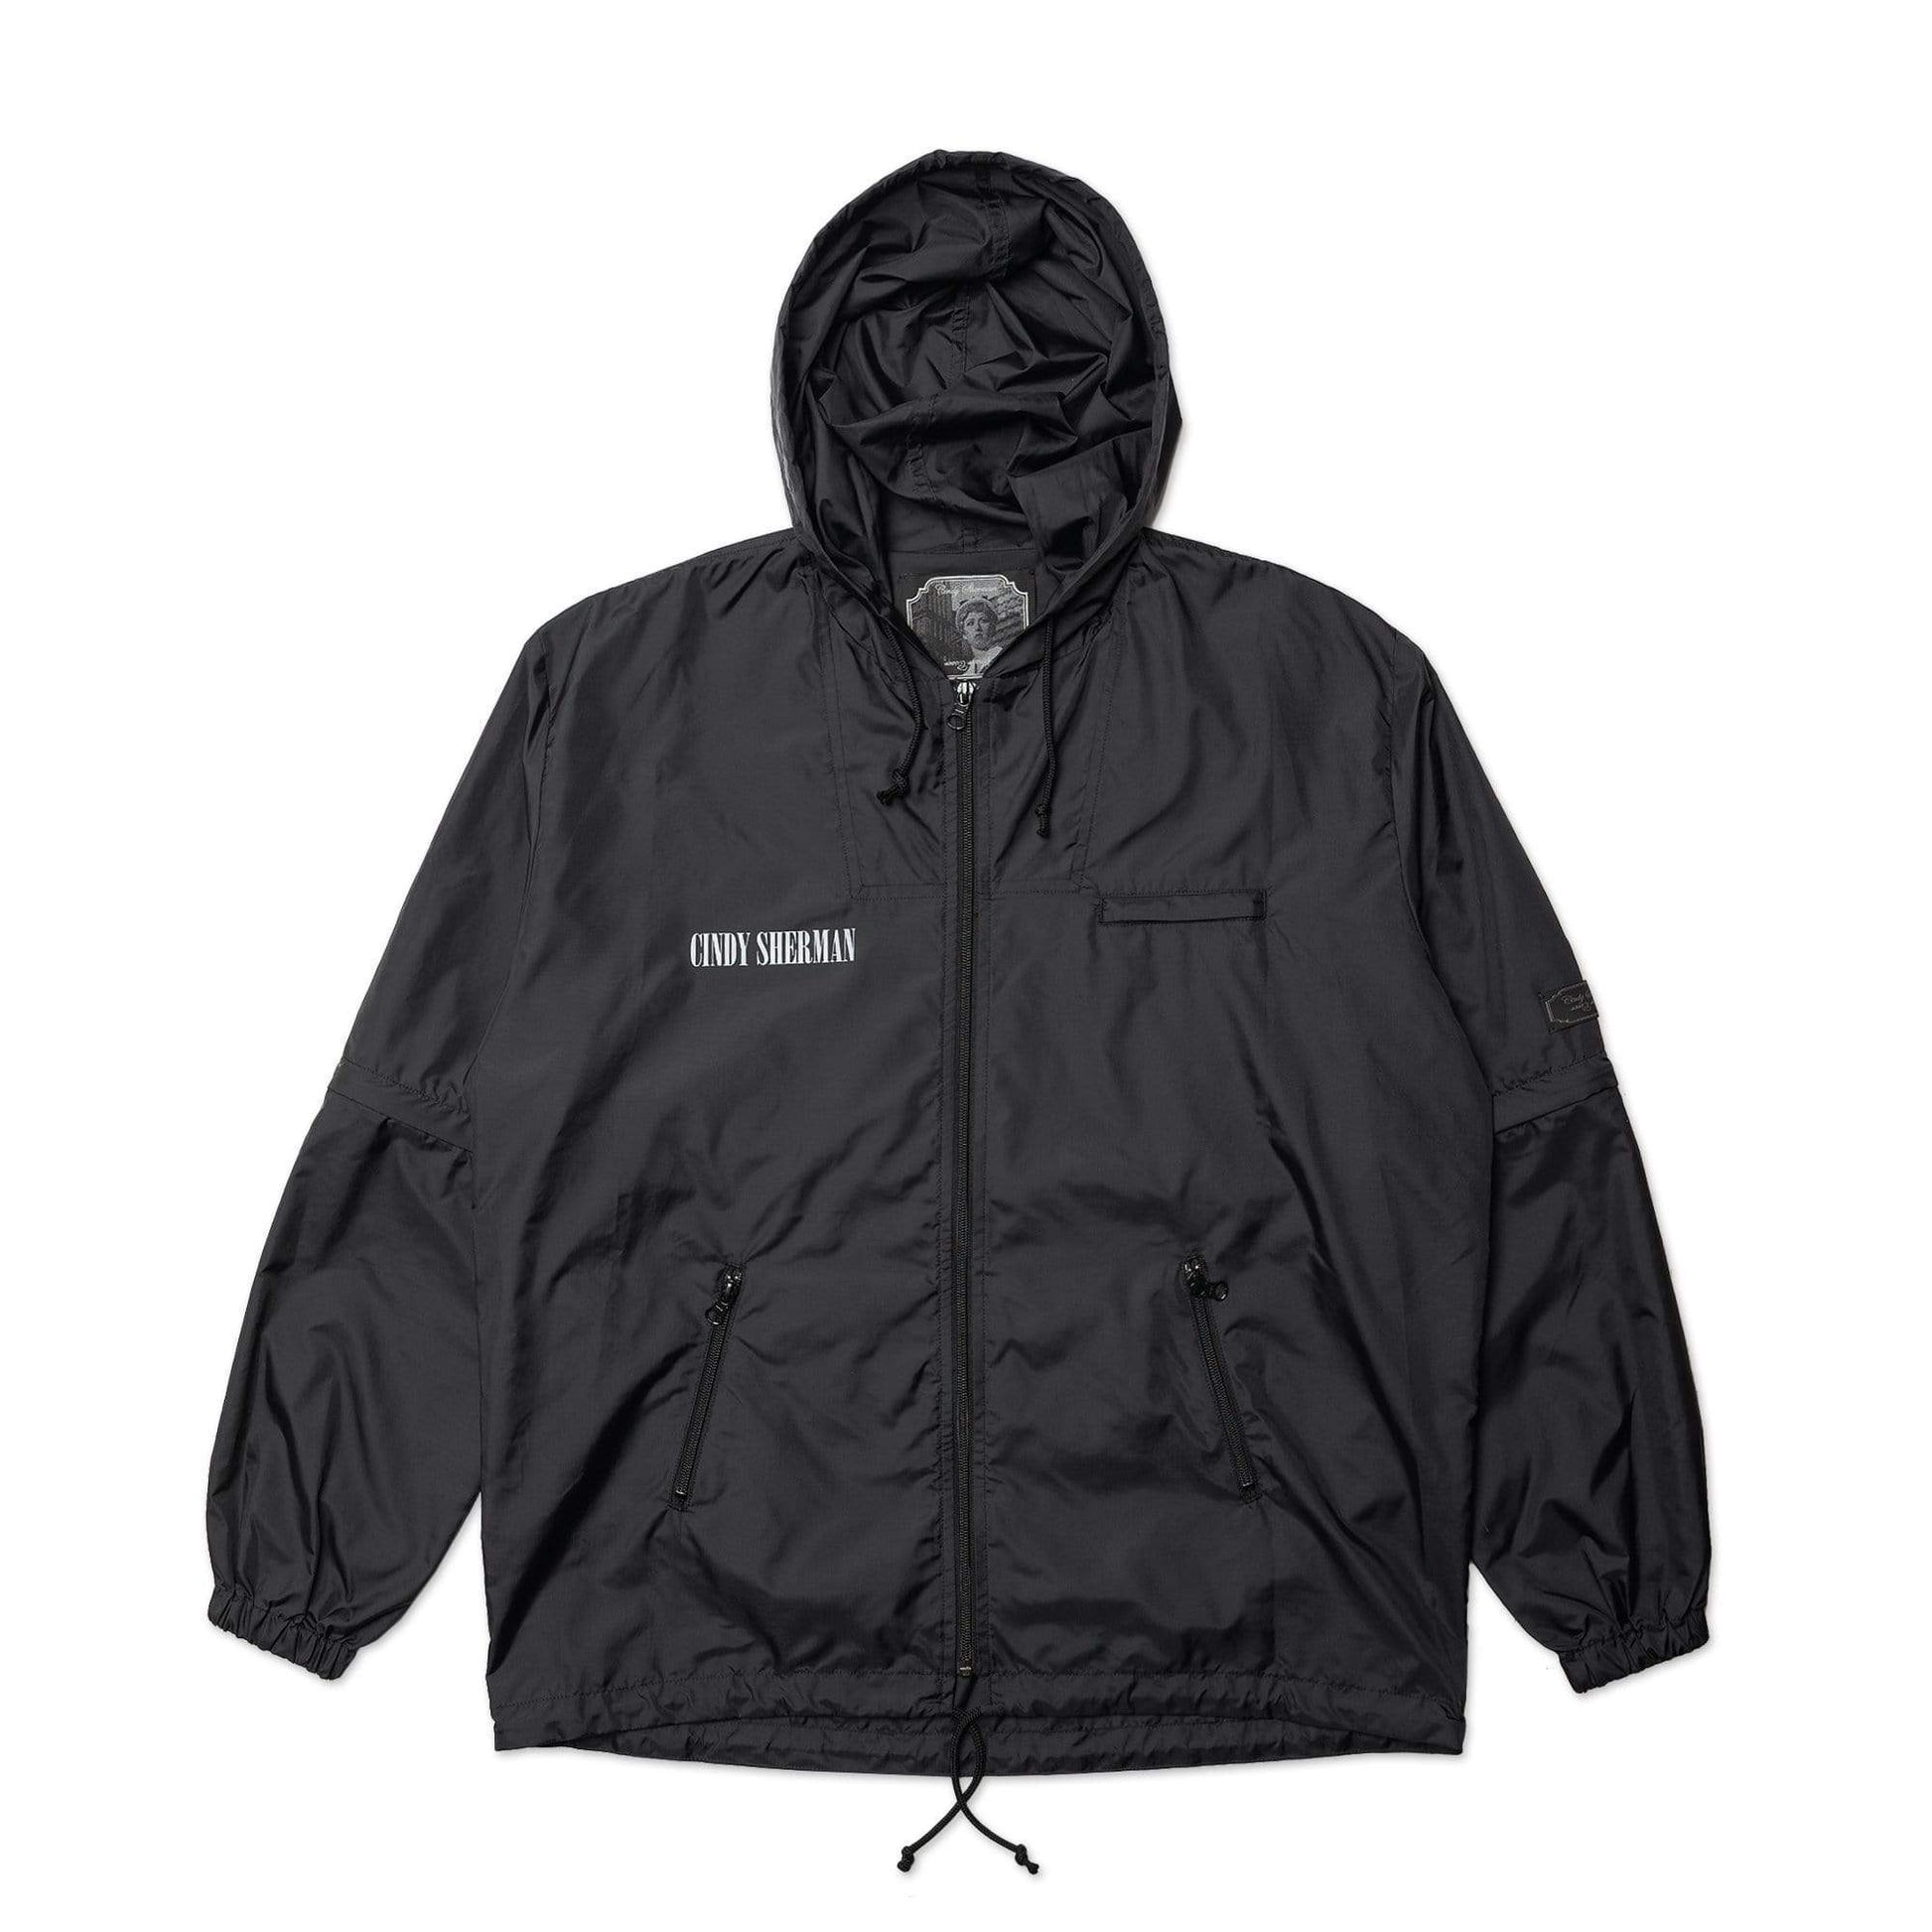 undercover blouson jacket "cindy sherman" (black) - ucy4208-1 - a.plus - Image - 1